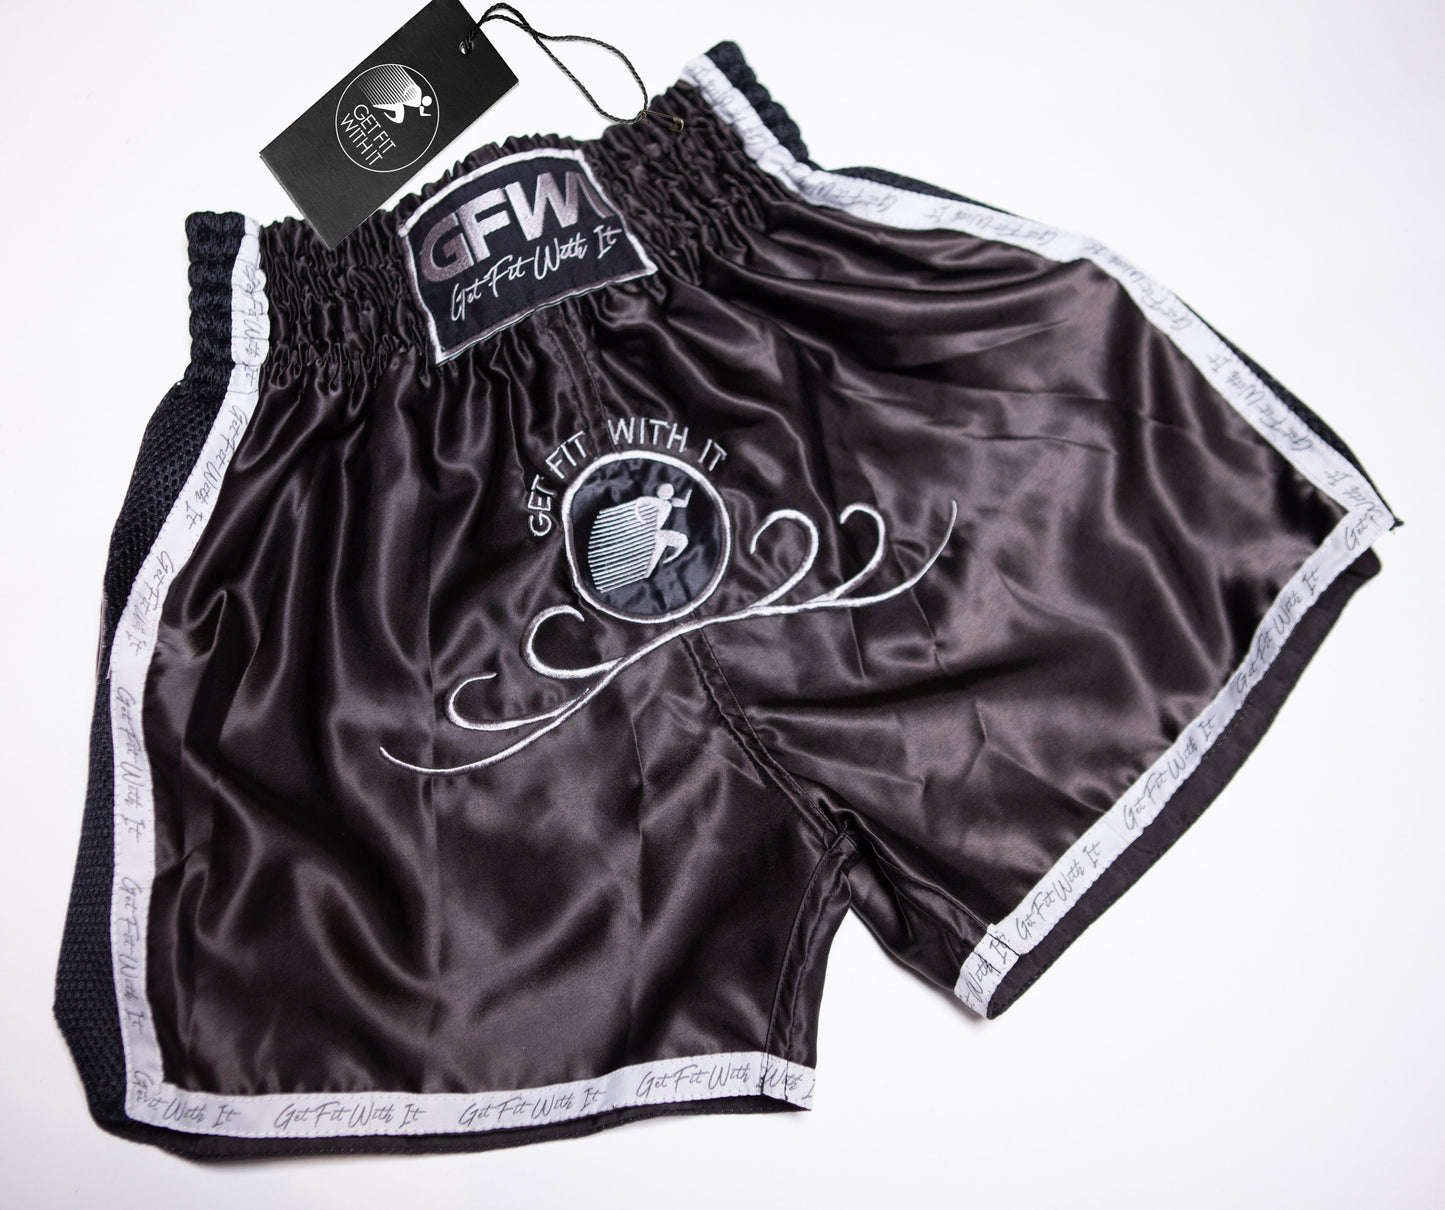 GFWI Black & White Muay Thai Shorts